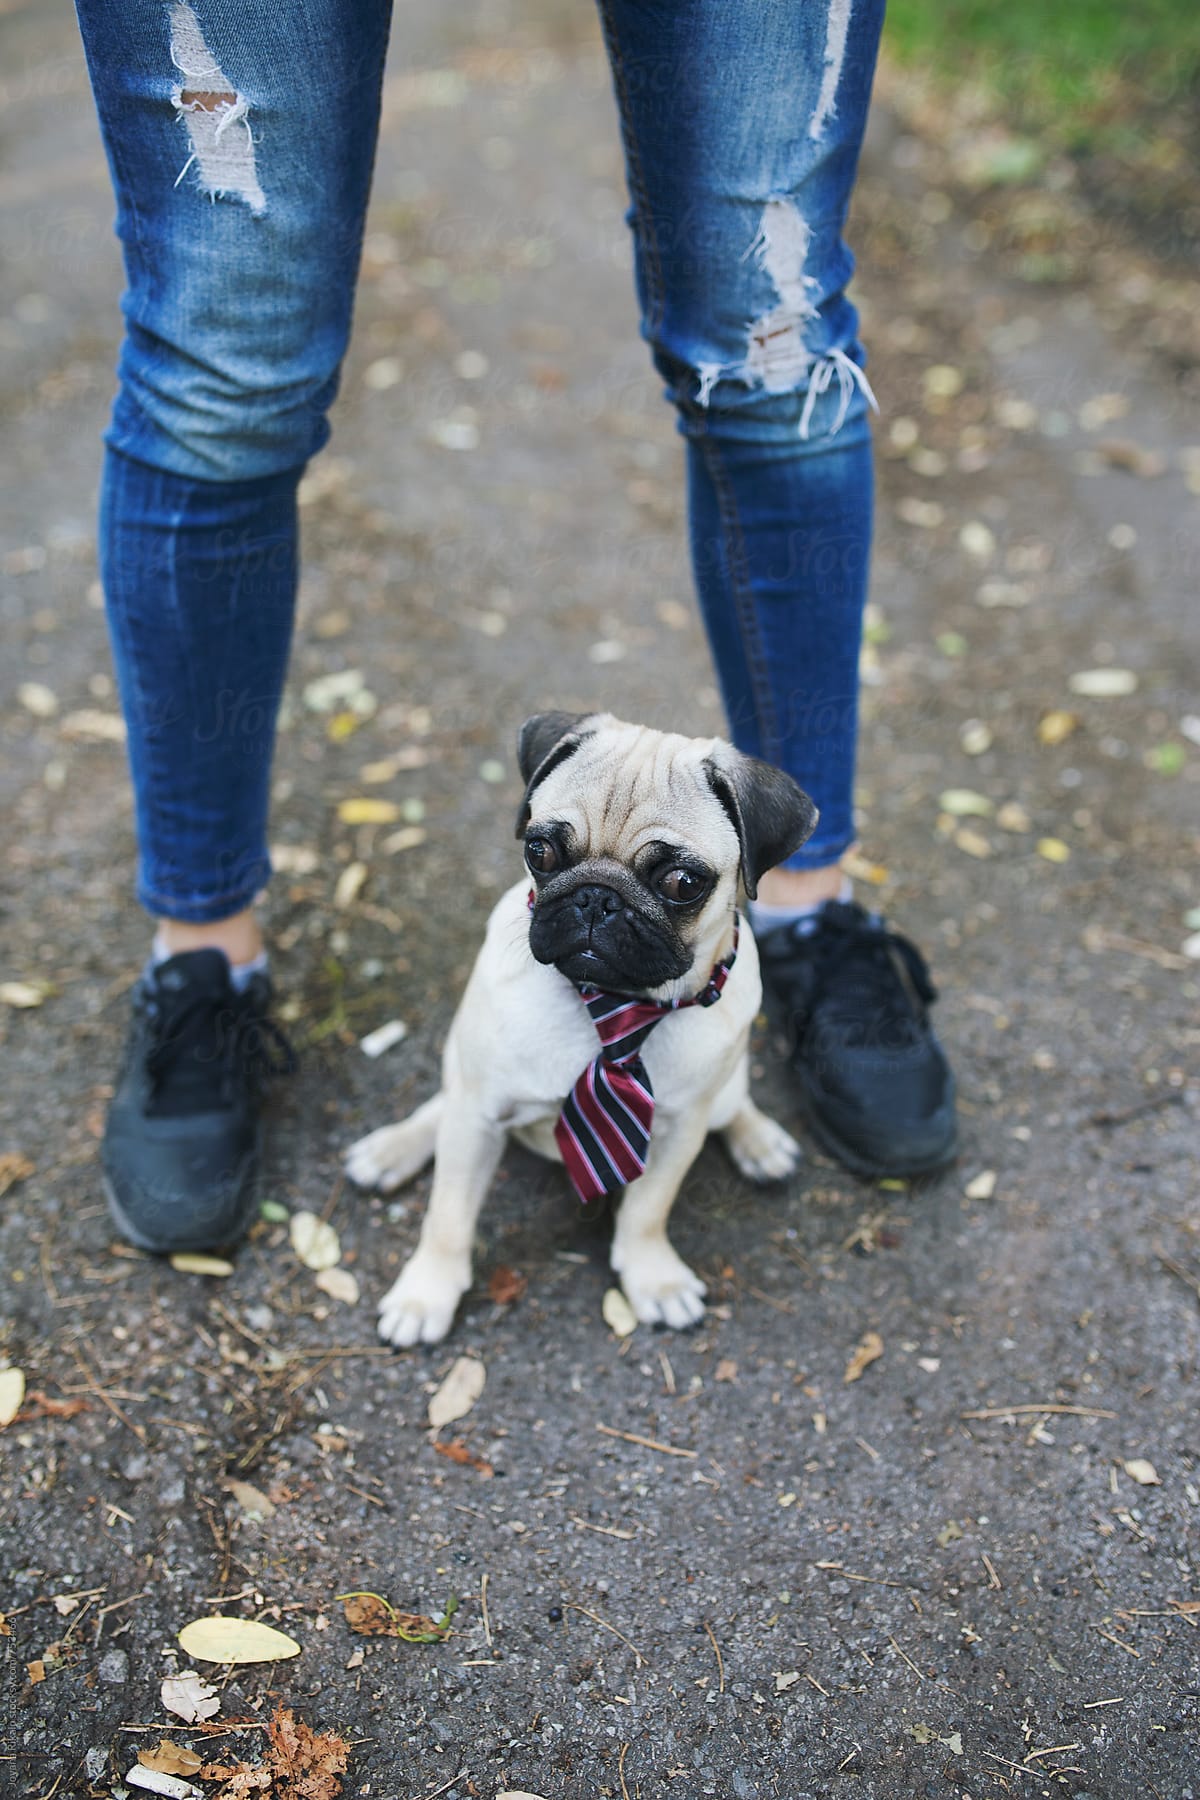 Fashionable pug dog wearing a tie